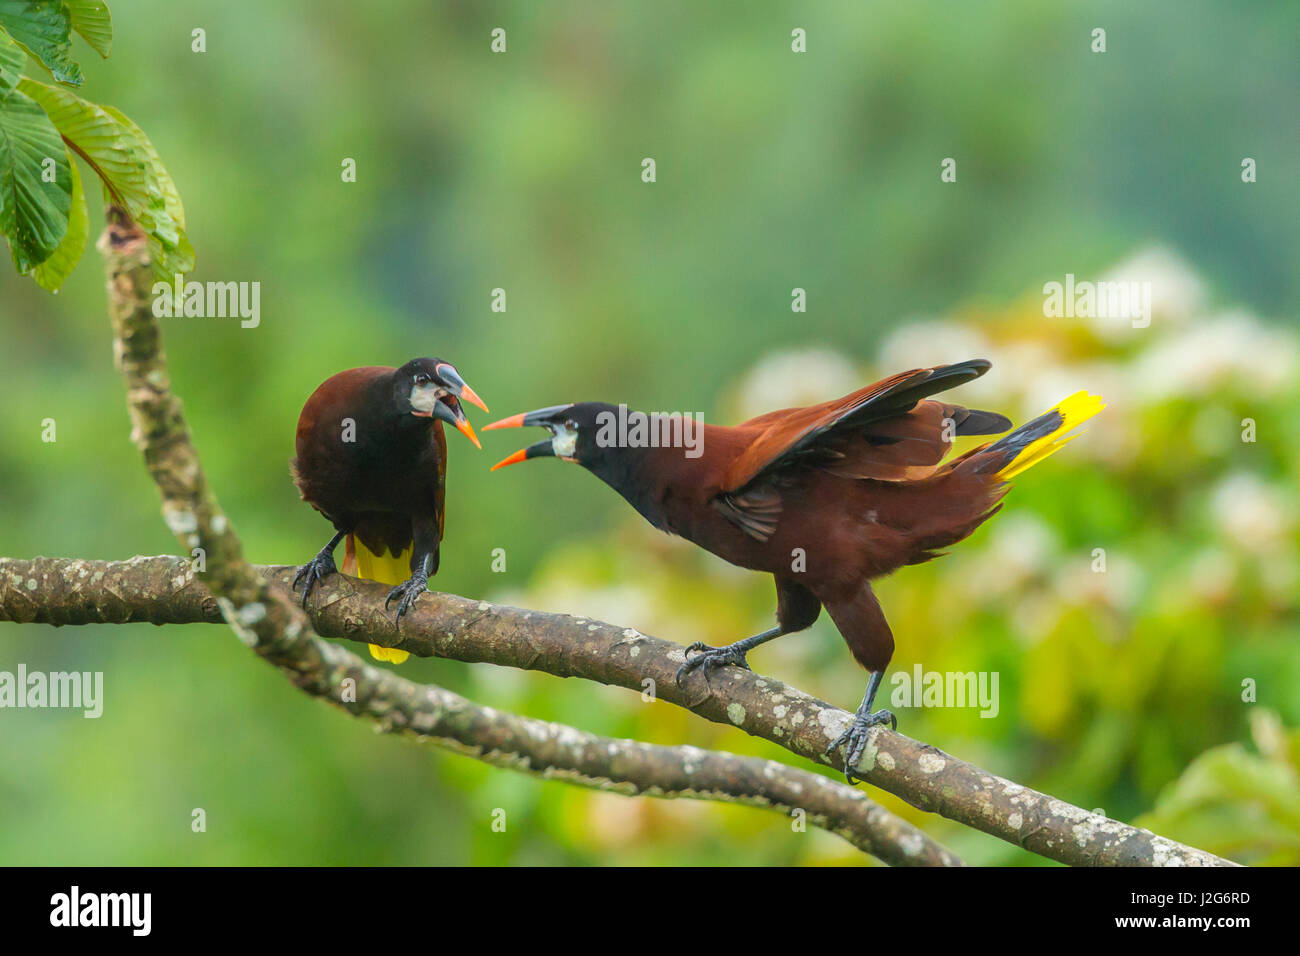 Mittelamerika, Costa Rica, Arenal. Montezuma Oropendola Vögel im Baum. Kredit als: Cathy & Gordon Illg / Jaynes Galerie / DanitaDelimont.com Stockfoto